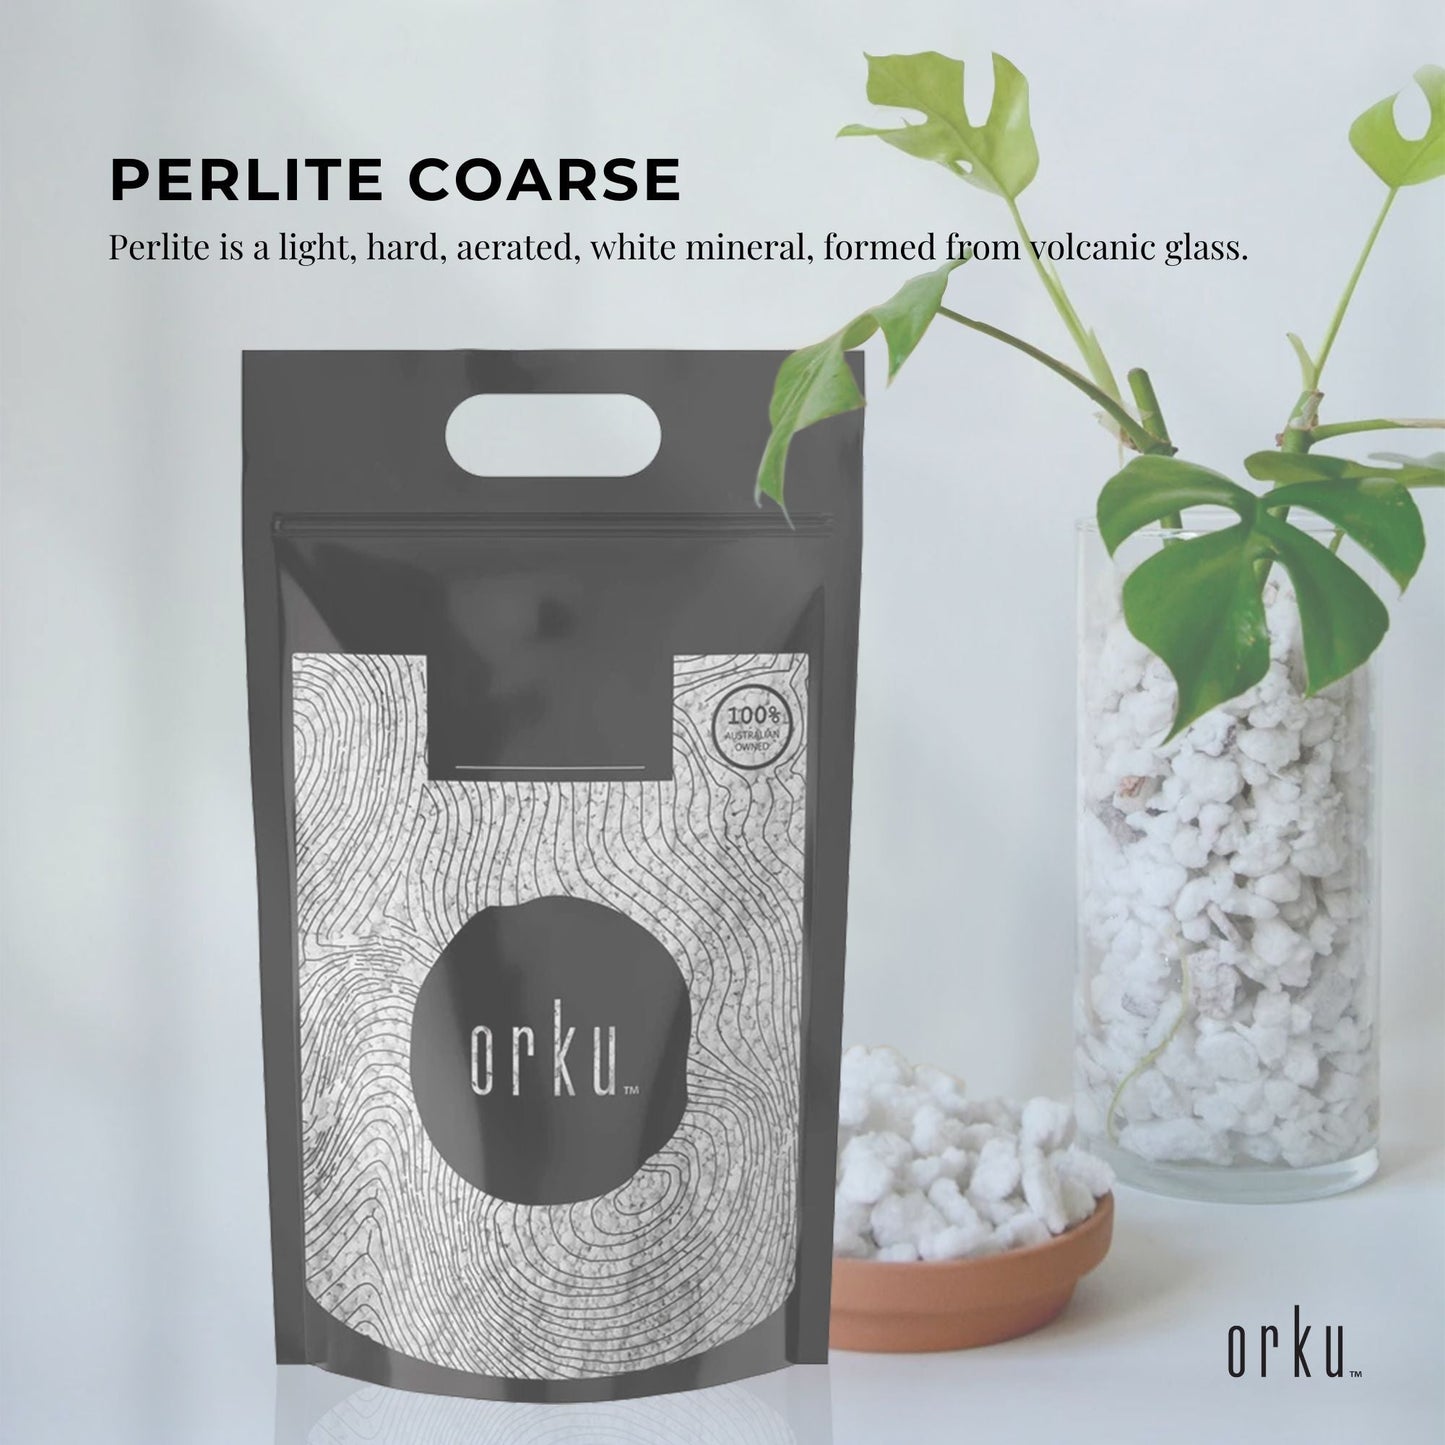 10L Perlite Coarse Premium Soil Expanded Medium Plants Hydroponics